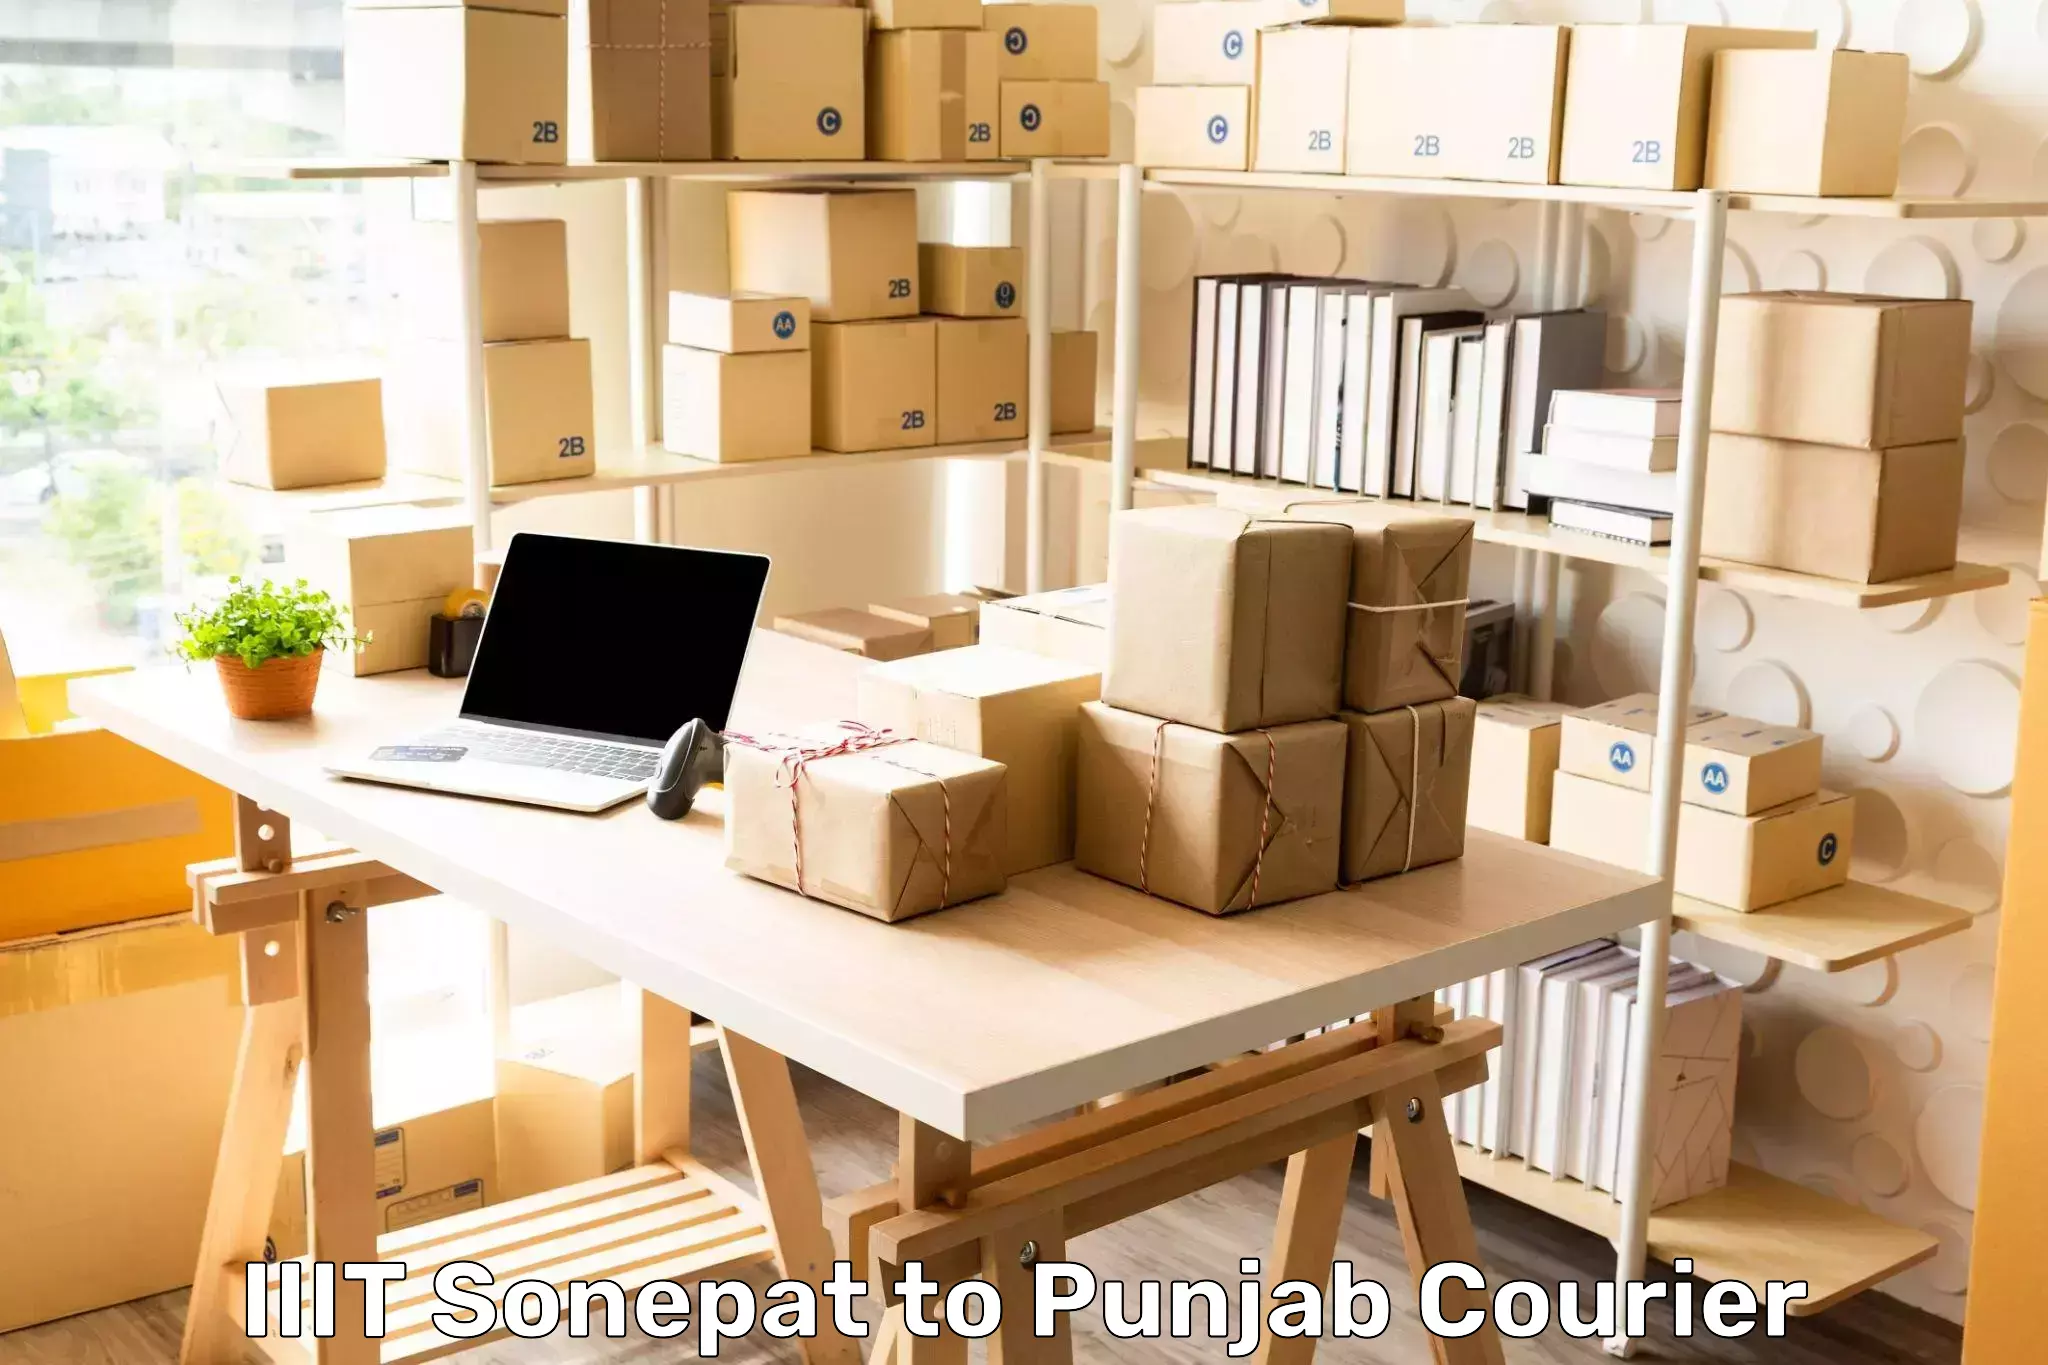 Business delivery service IIIT Sonepat to Muktsar